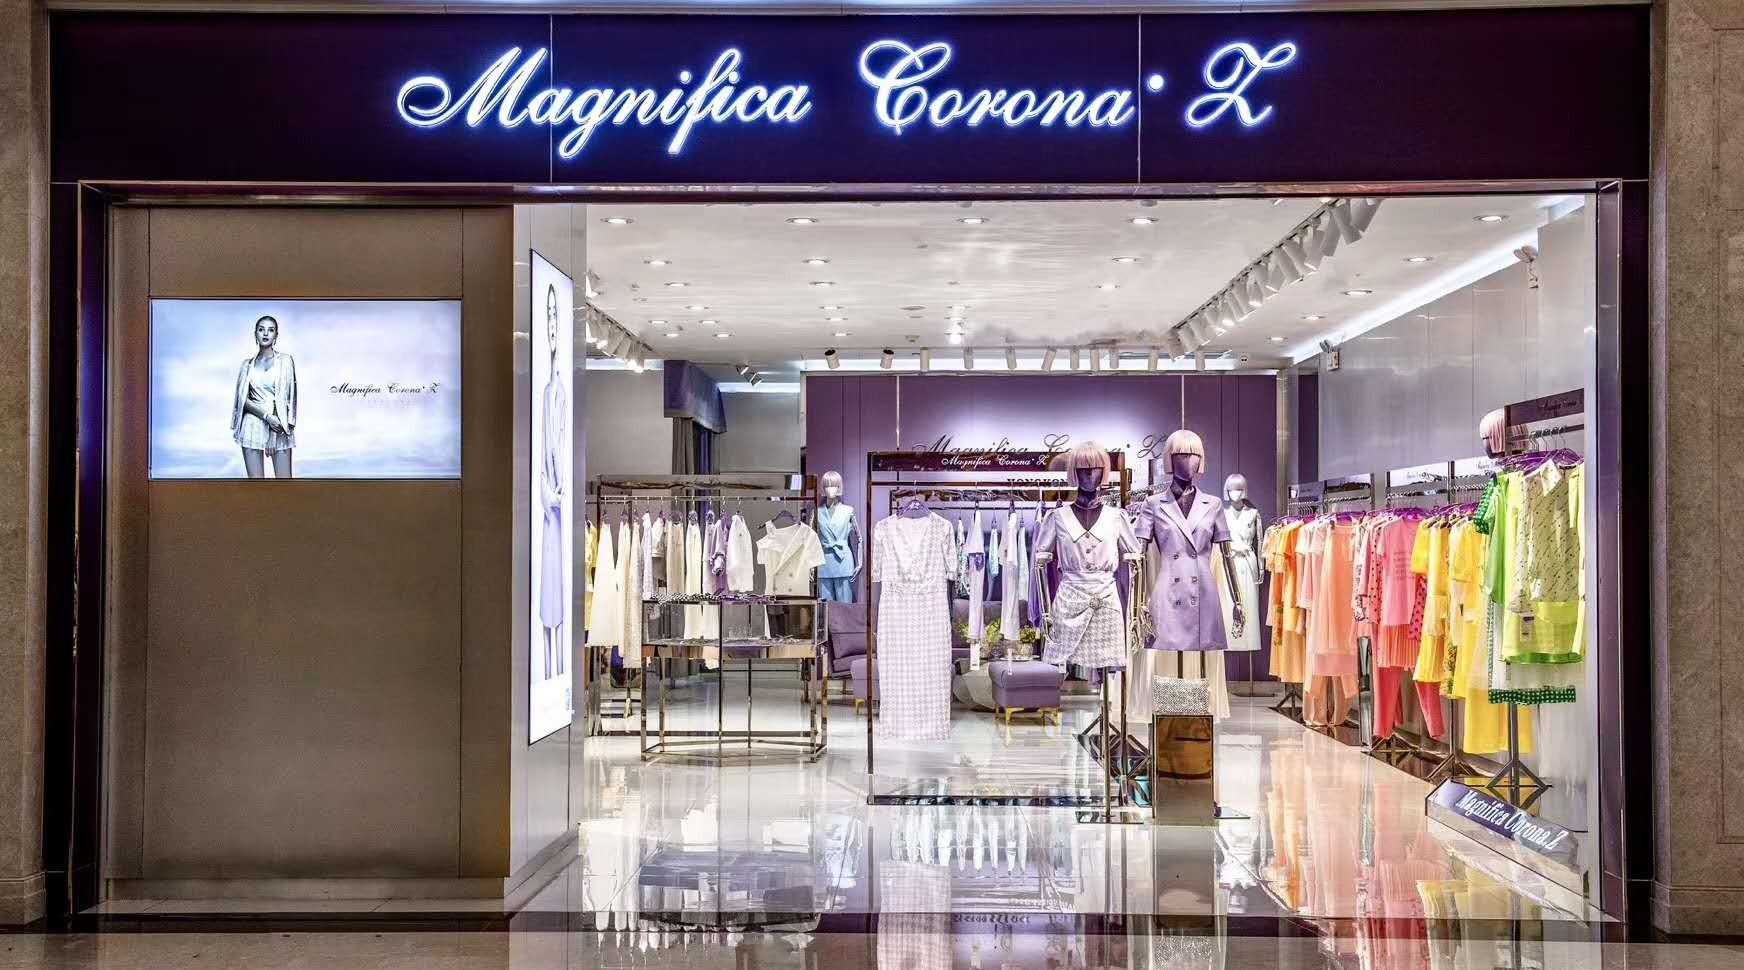 Magnifica Corona·Z  品牌开业集锦片